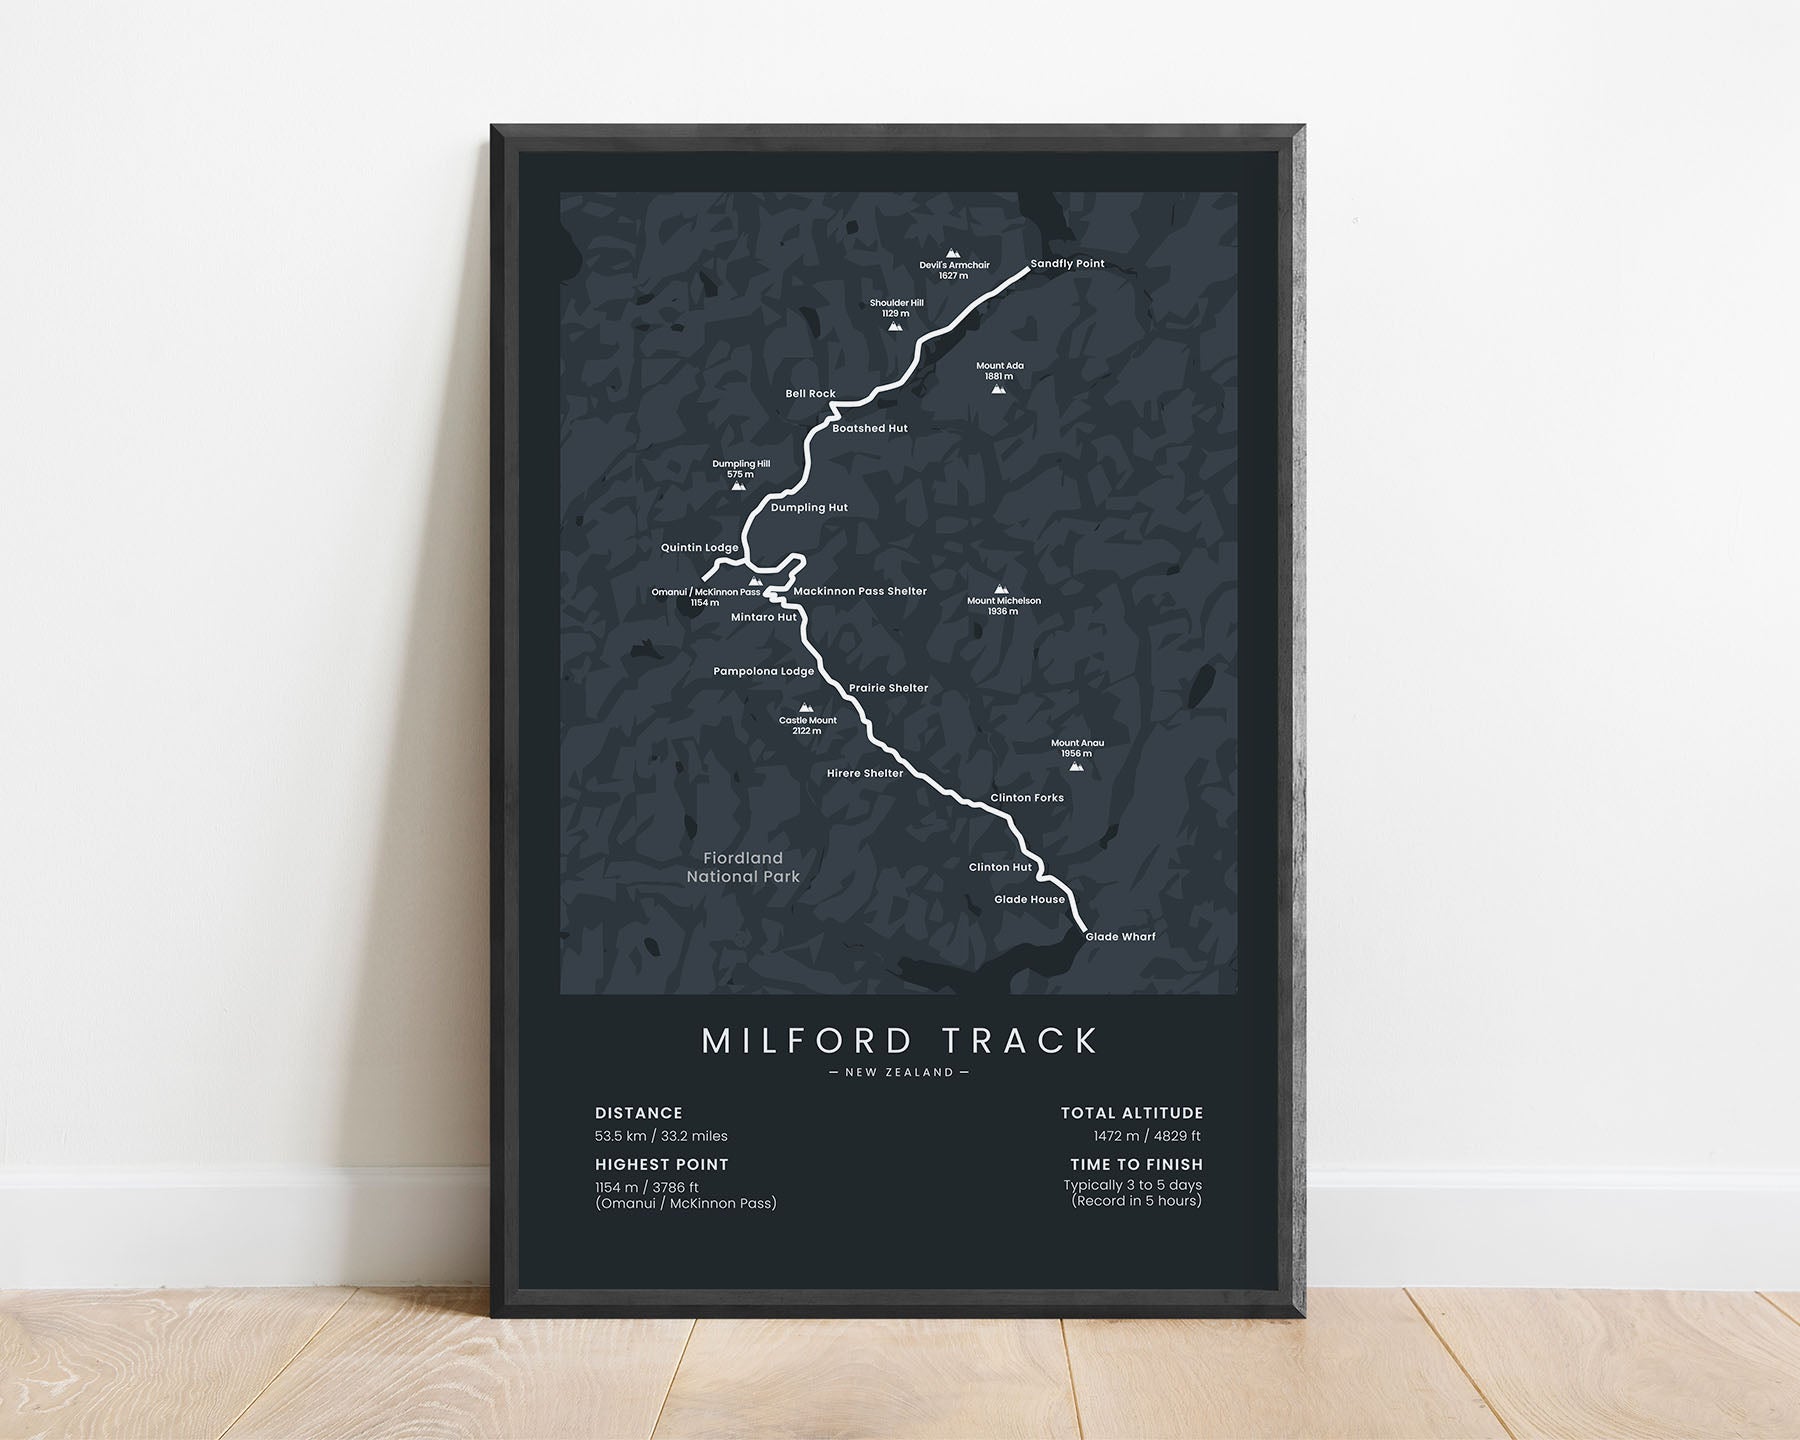 Milford Track (South Island) trek print with black background